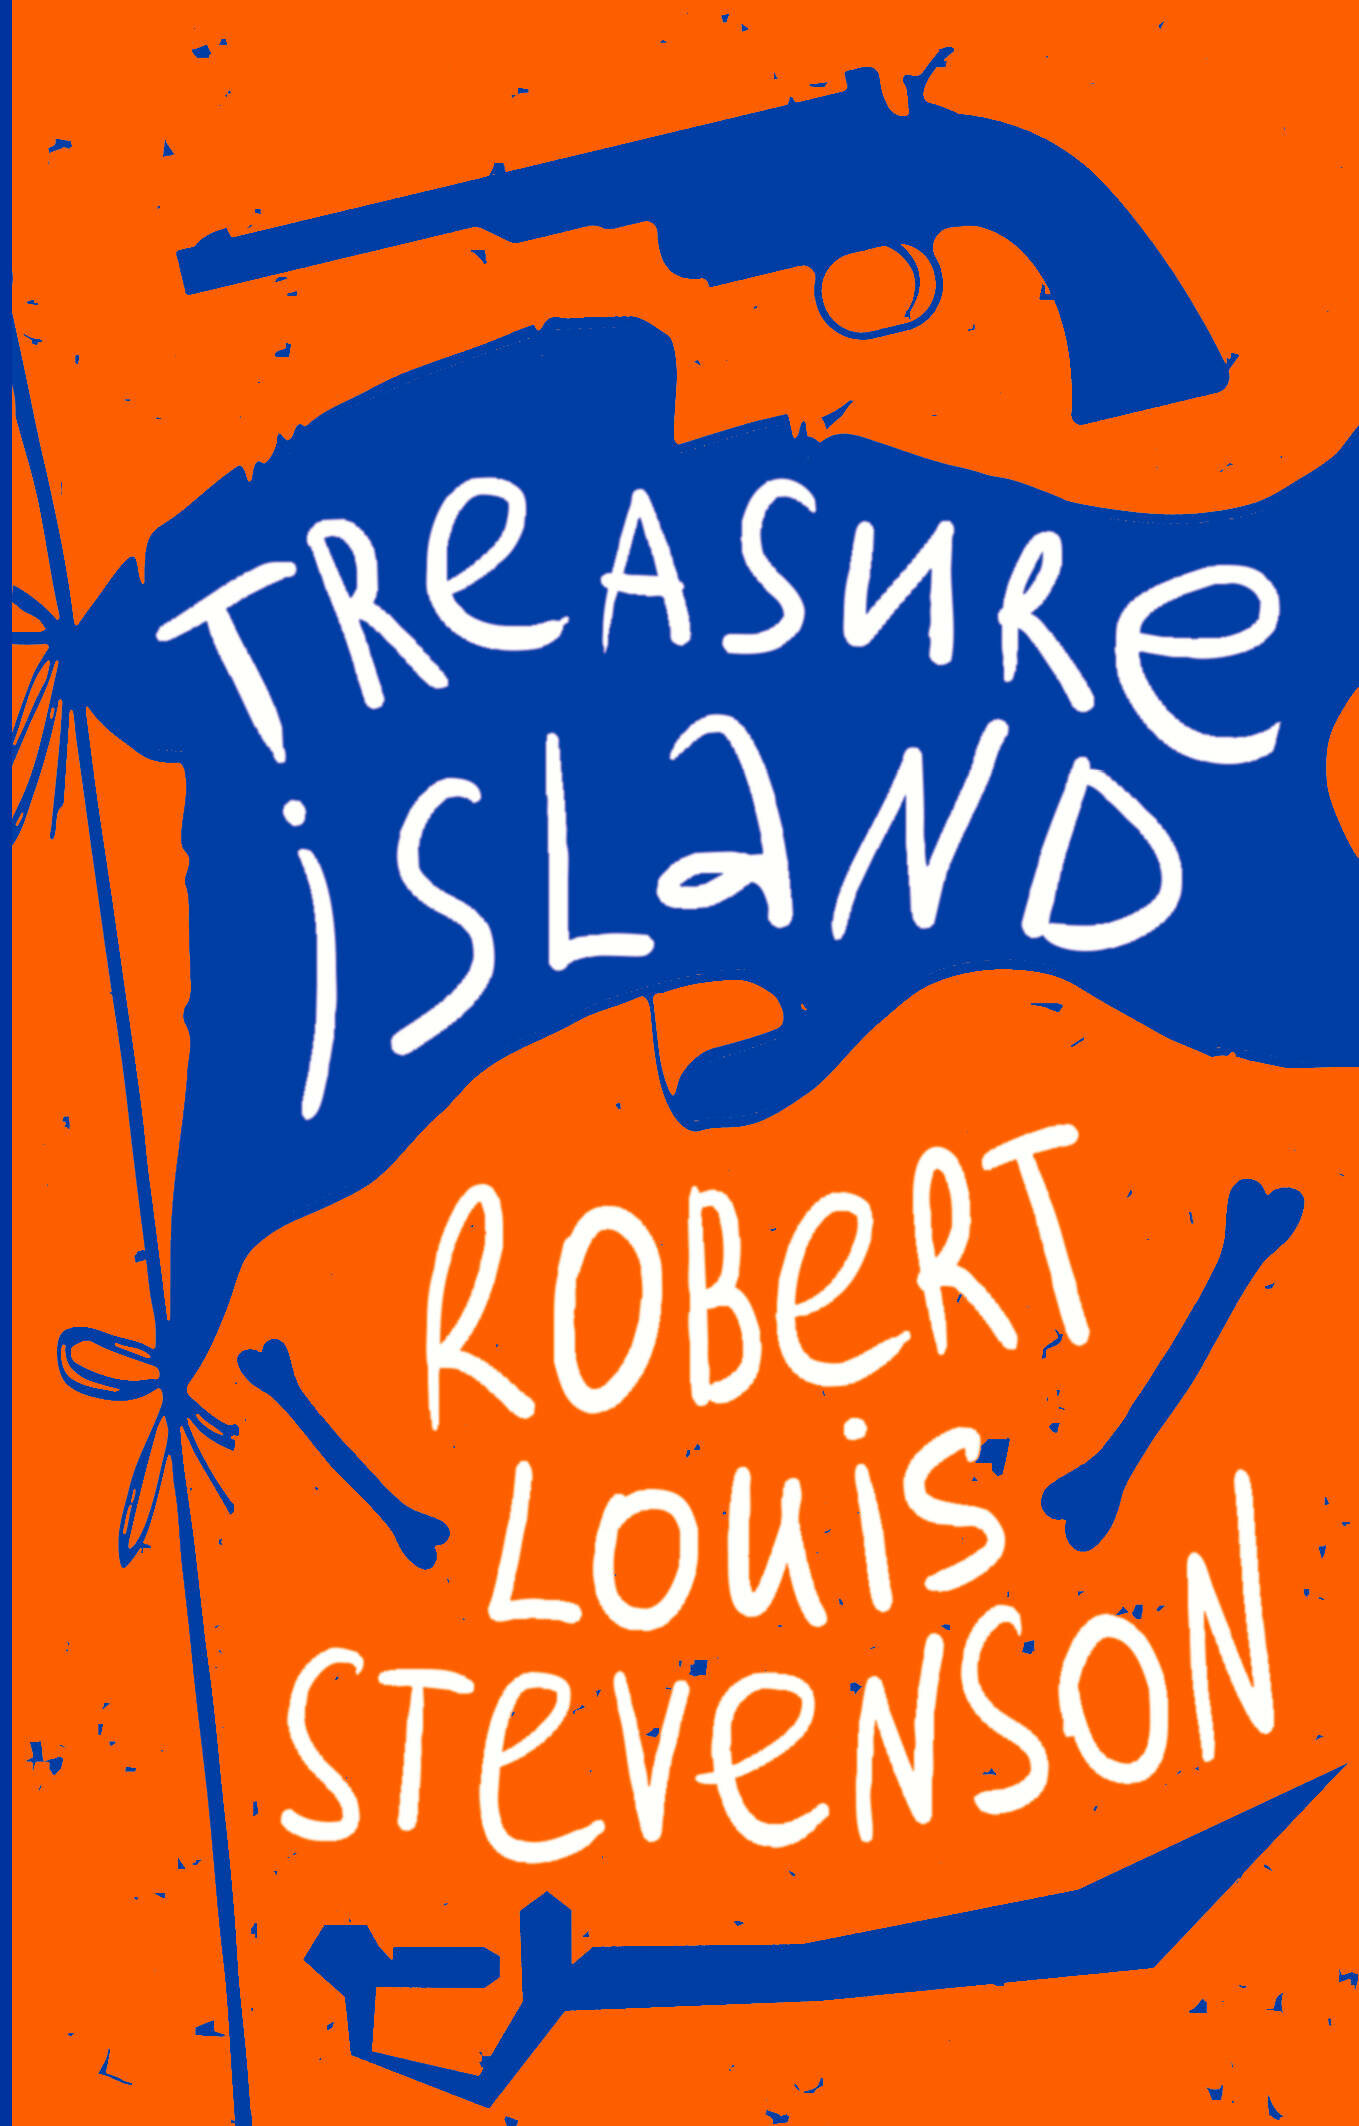 Treasure Island Stevenson Robert L.